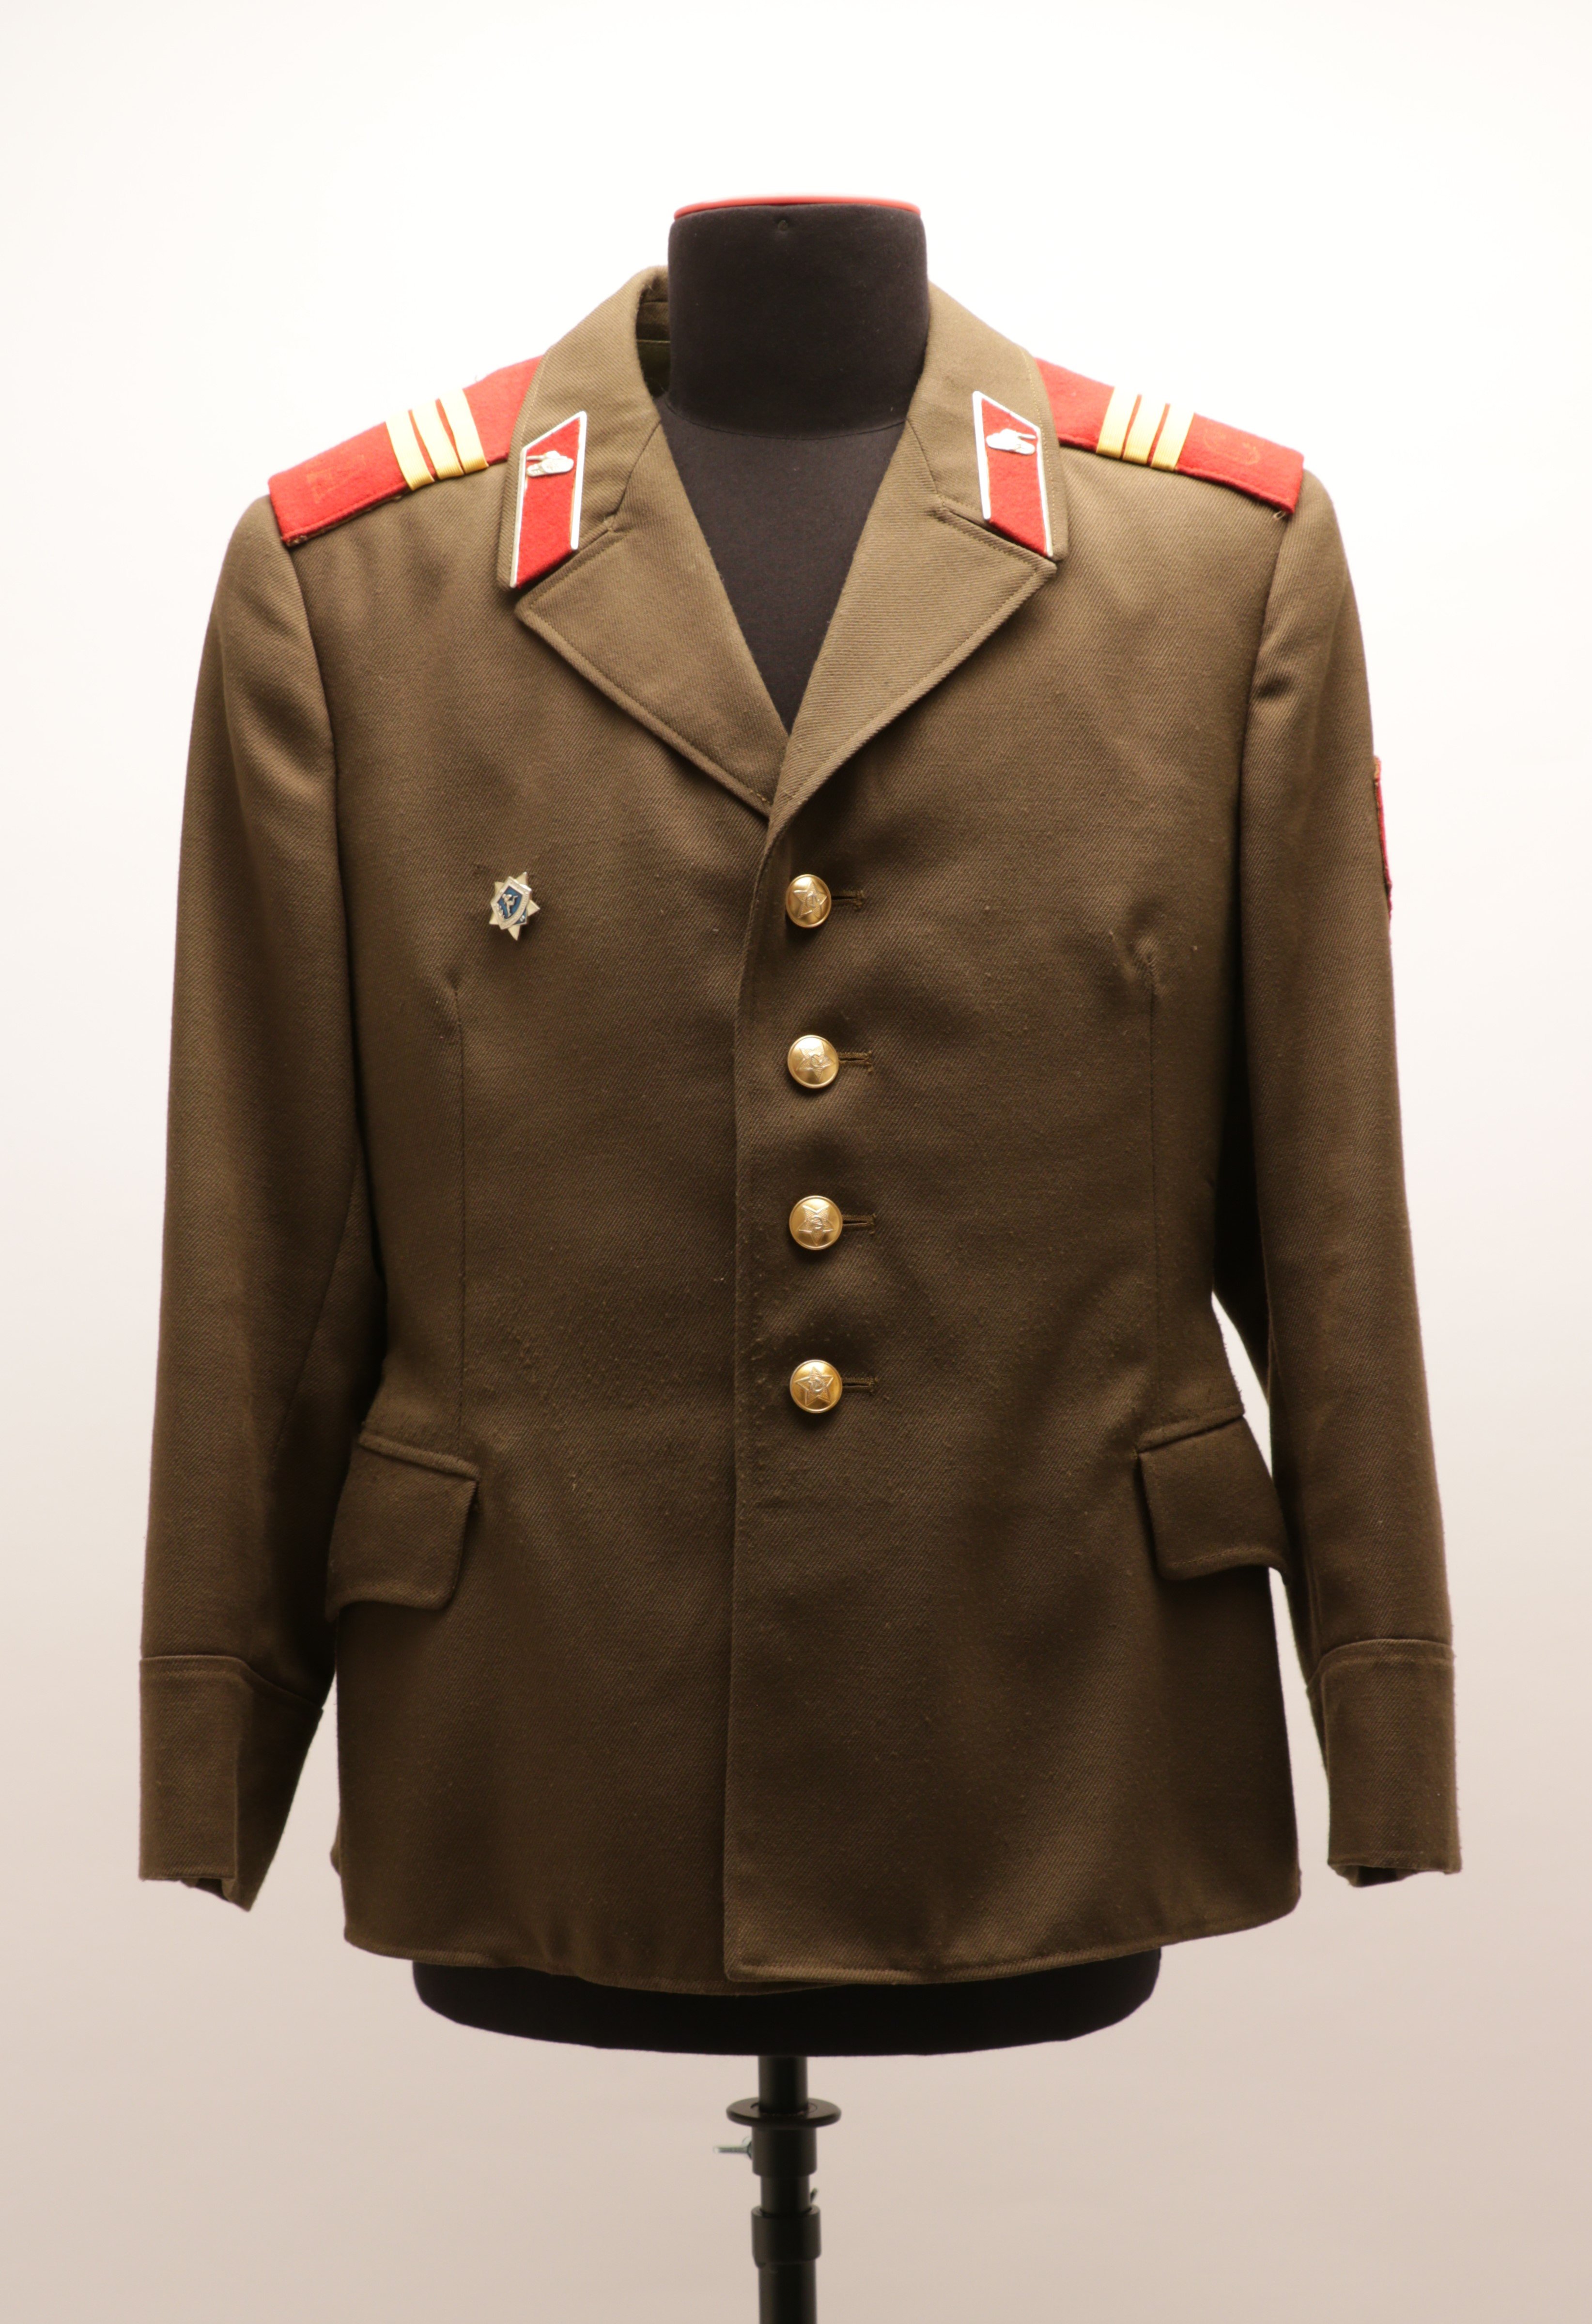 Uniformjacke (Parade- und Ausgangsuniform eines Sergeanten), Sowjetunion, 1987 (Museum Berlin-Karlshorst CC BY-NC-SA)